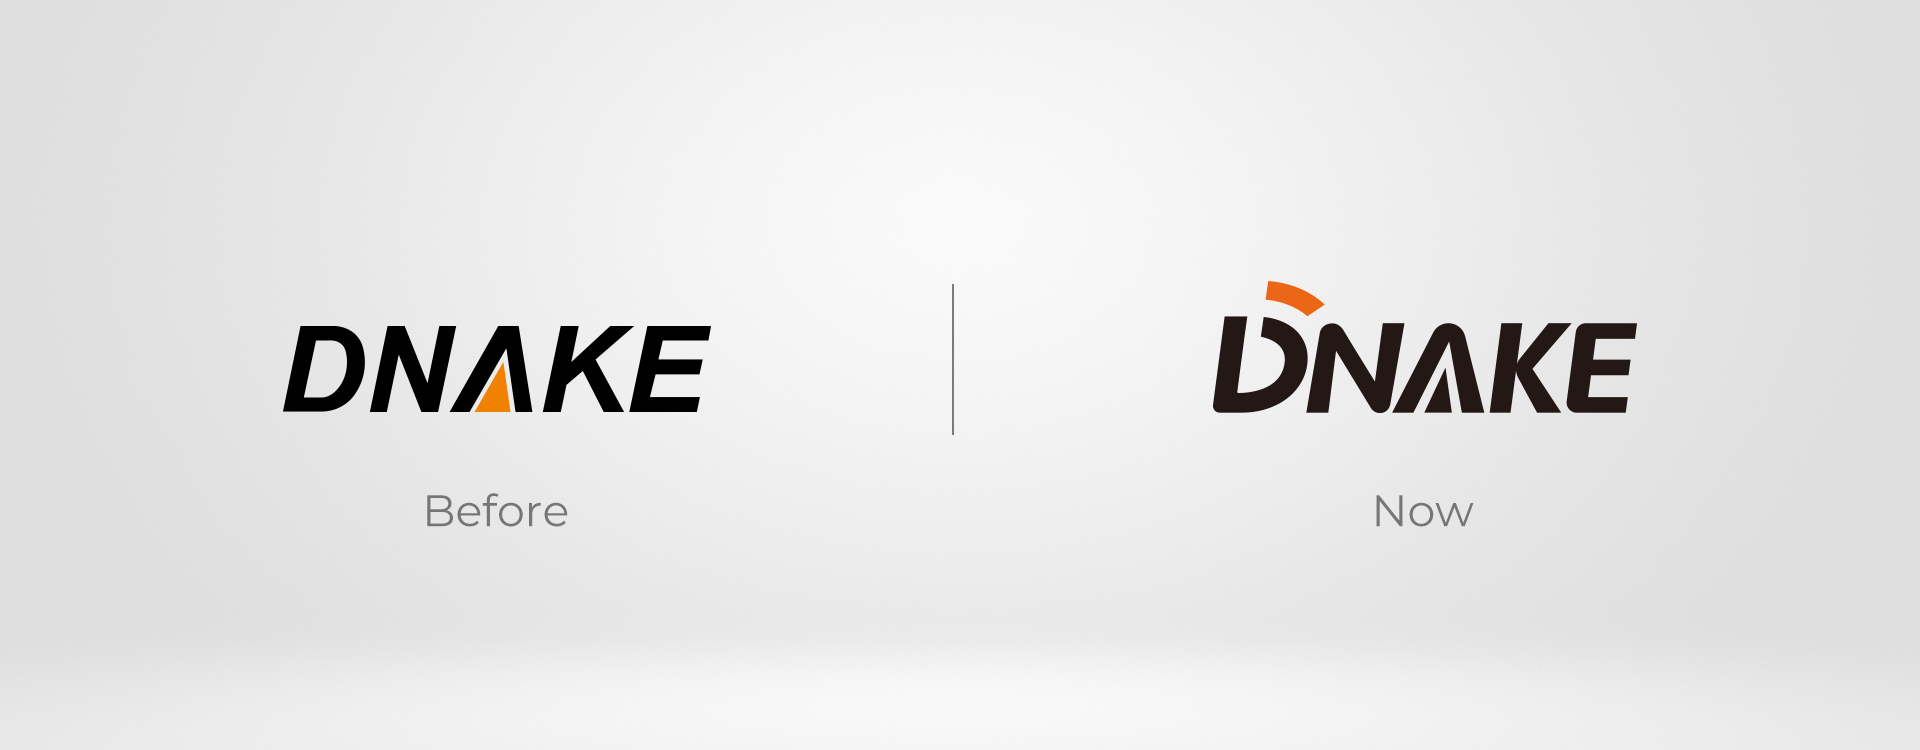 DNAKE New Logo Comparison